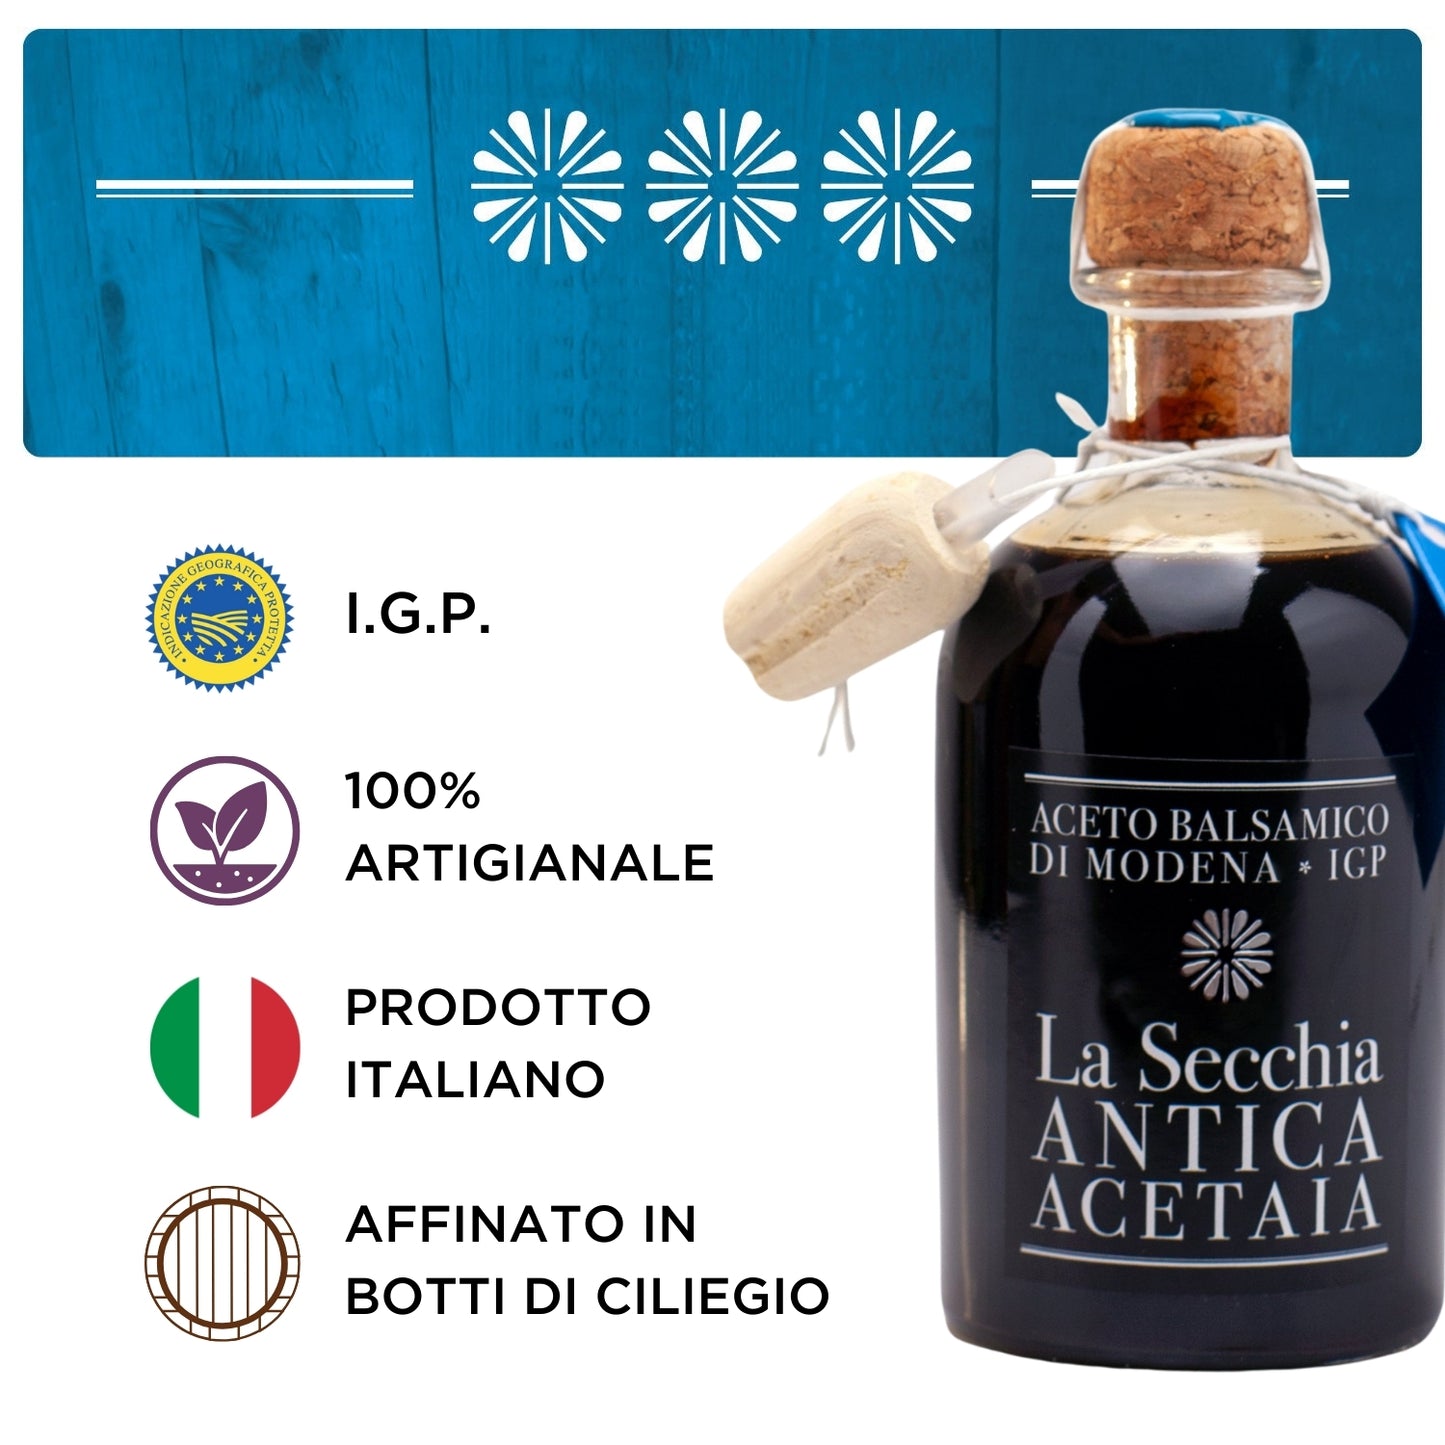 Balsamic Vinegar of Modena PGI 3 stars 